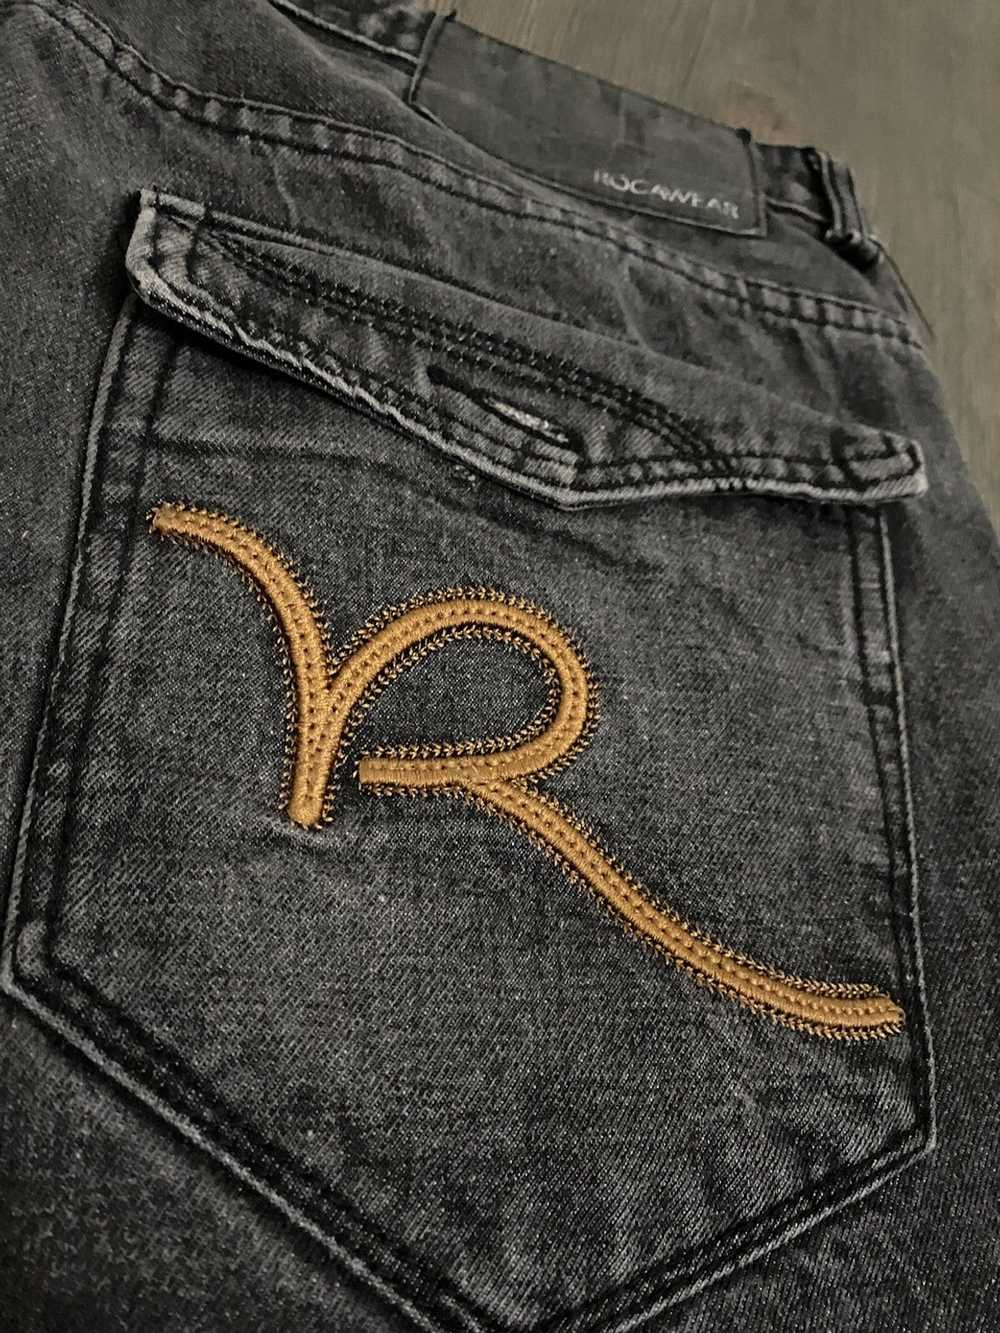 Rocawear Vintage Rocawear Jeans - image 3